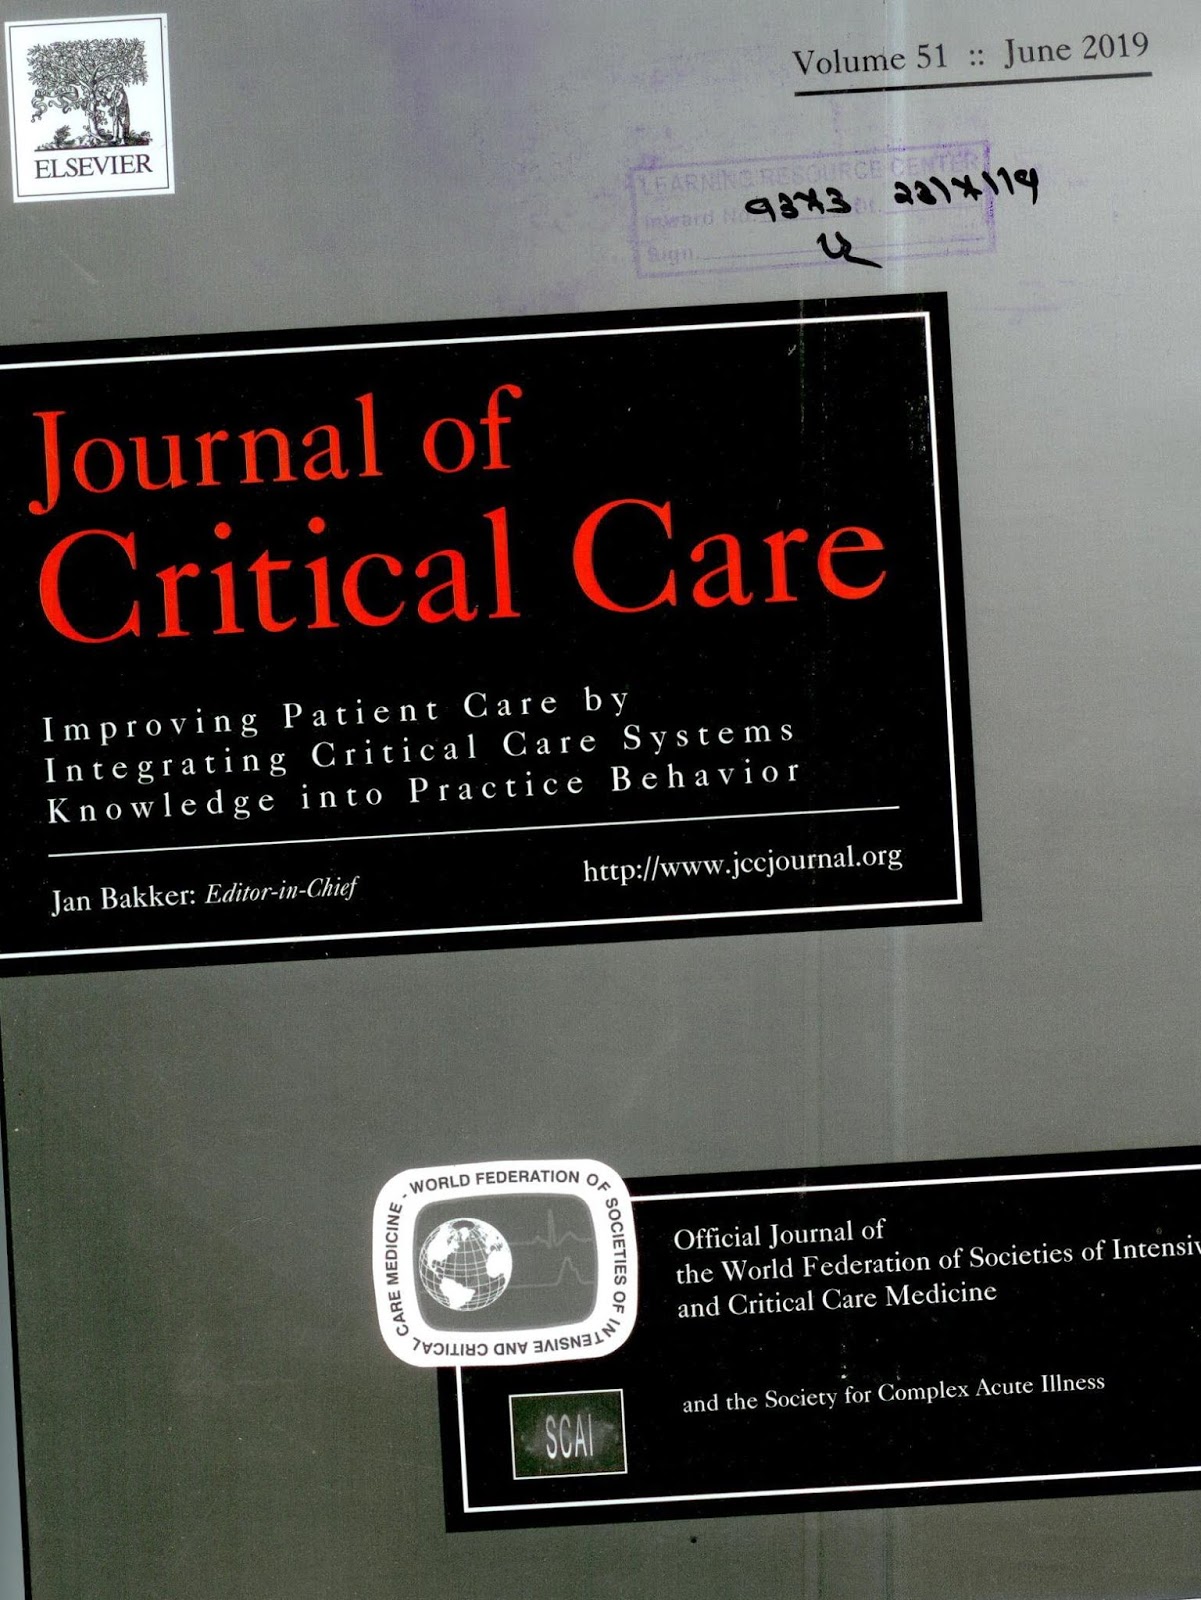 https://www.sciencedirect.com/journal/journal-of-critical-care/vol/51/suppl/C